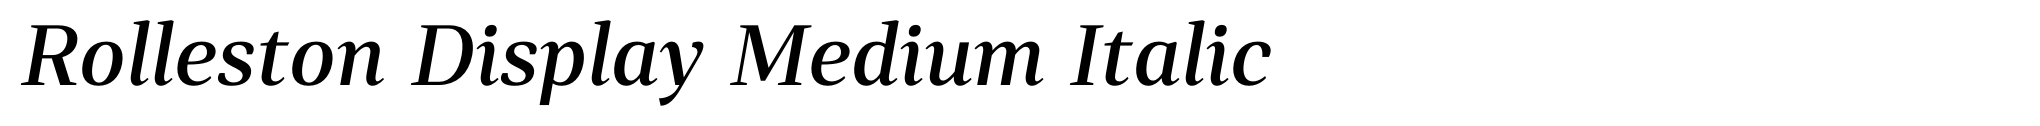 Rolleston Display Medium Italic image